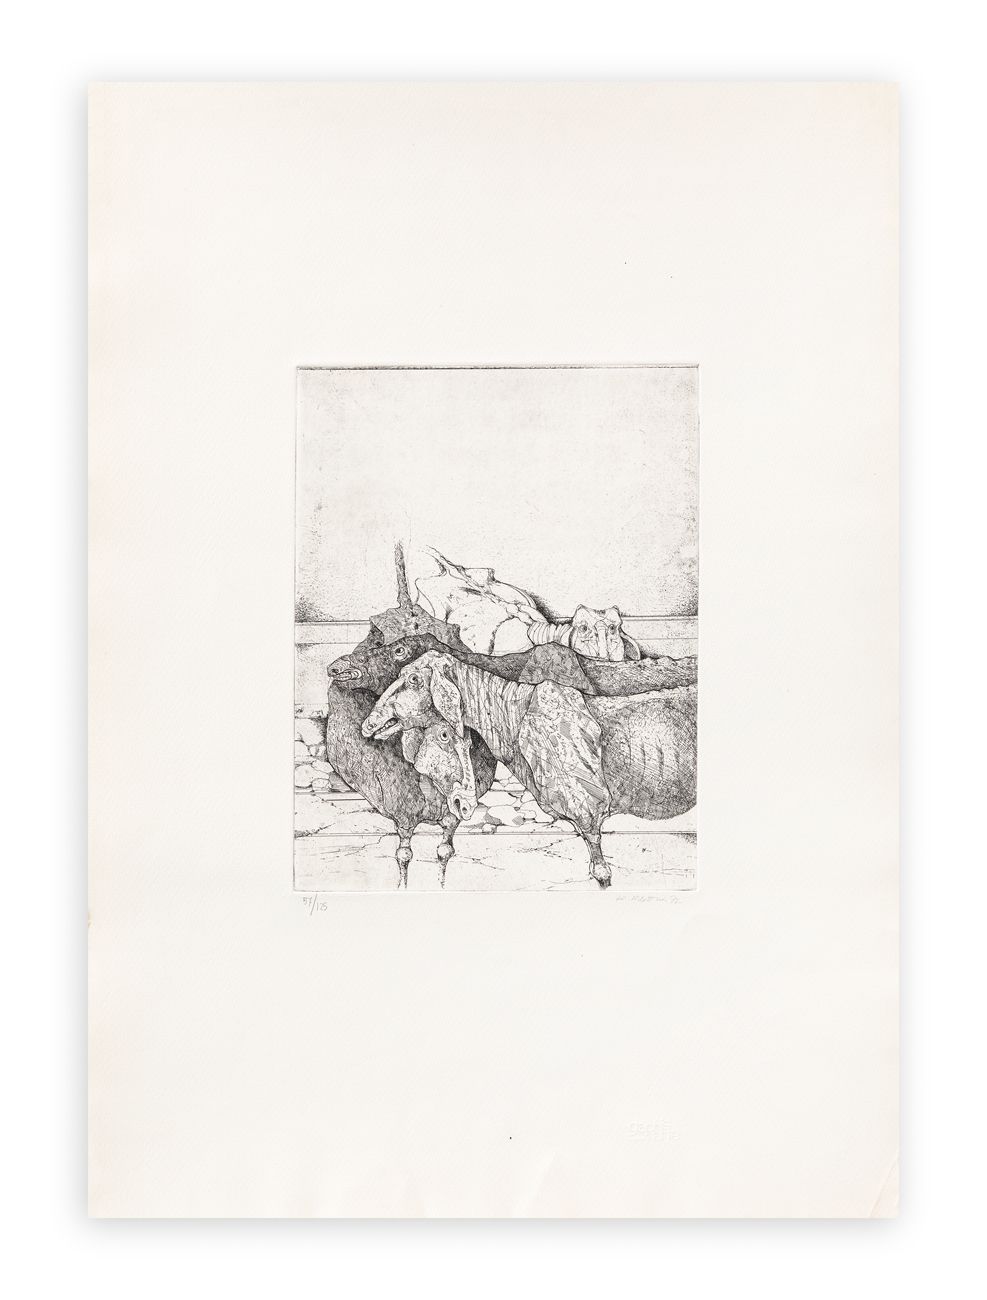 KARL PLATTNER (1919-1986) - Pecore, 1972 Etching in black and white
Sheet 32.2x2&hellip;